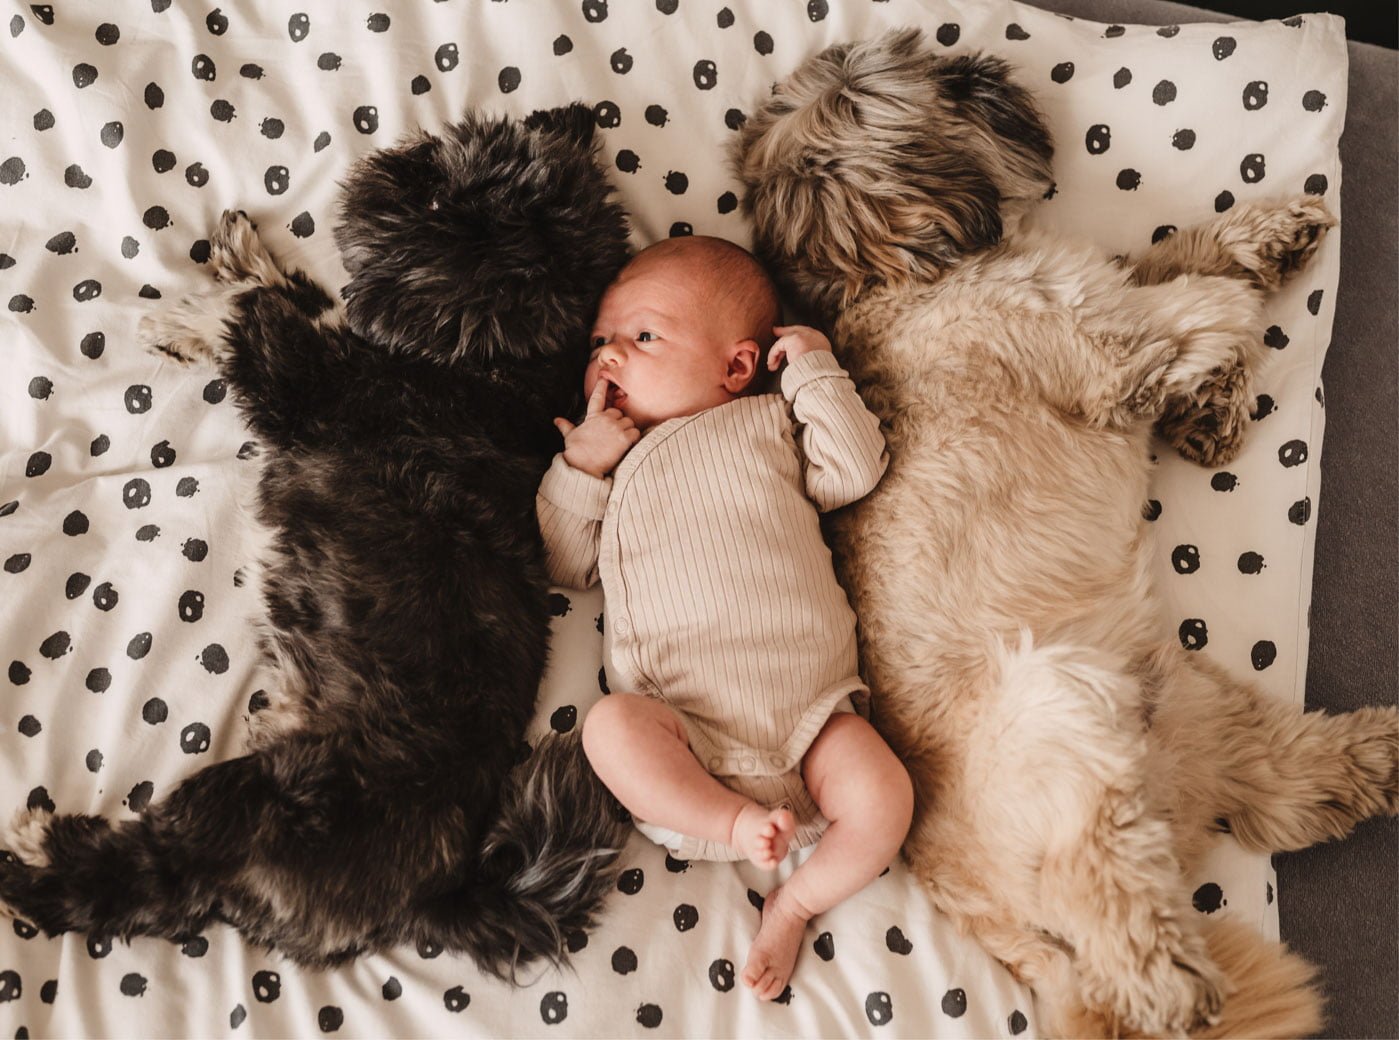 noworodek leży z dwoma psami na łóżku